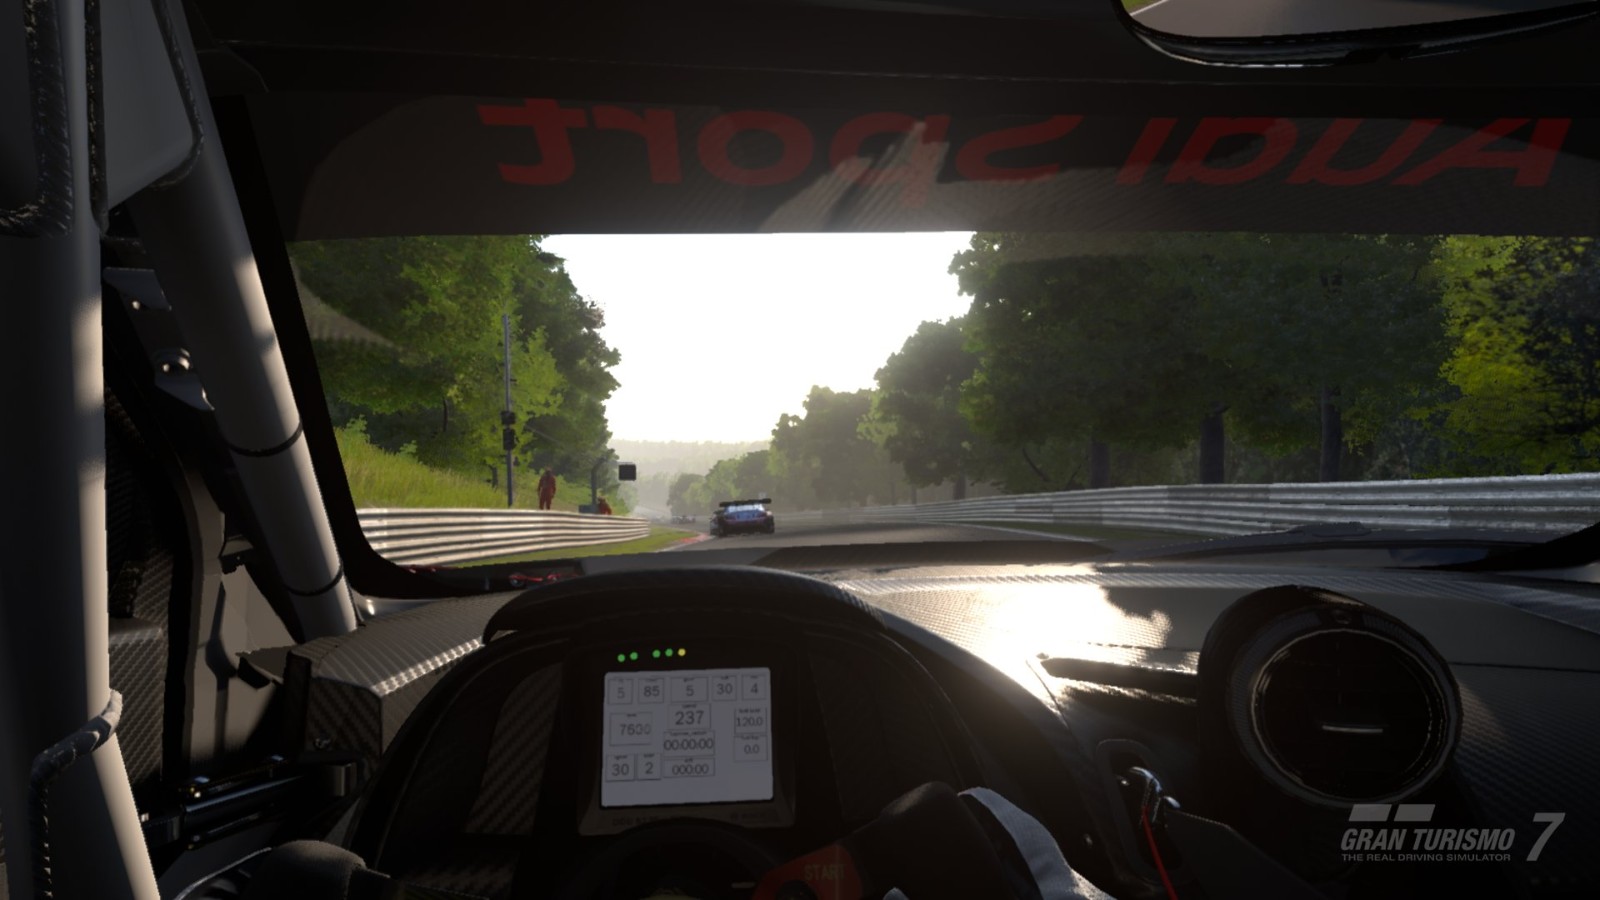 《GT赛车7》将于2月21日升级更新 获得PS VR2支持 二次世界 第4张